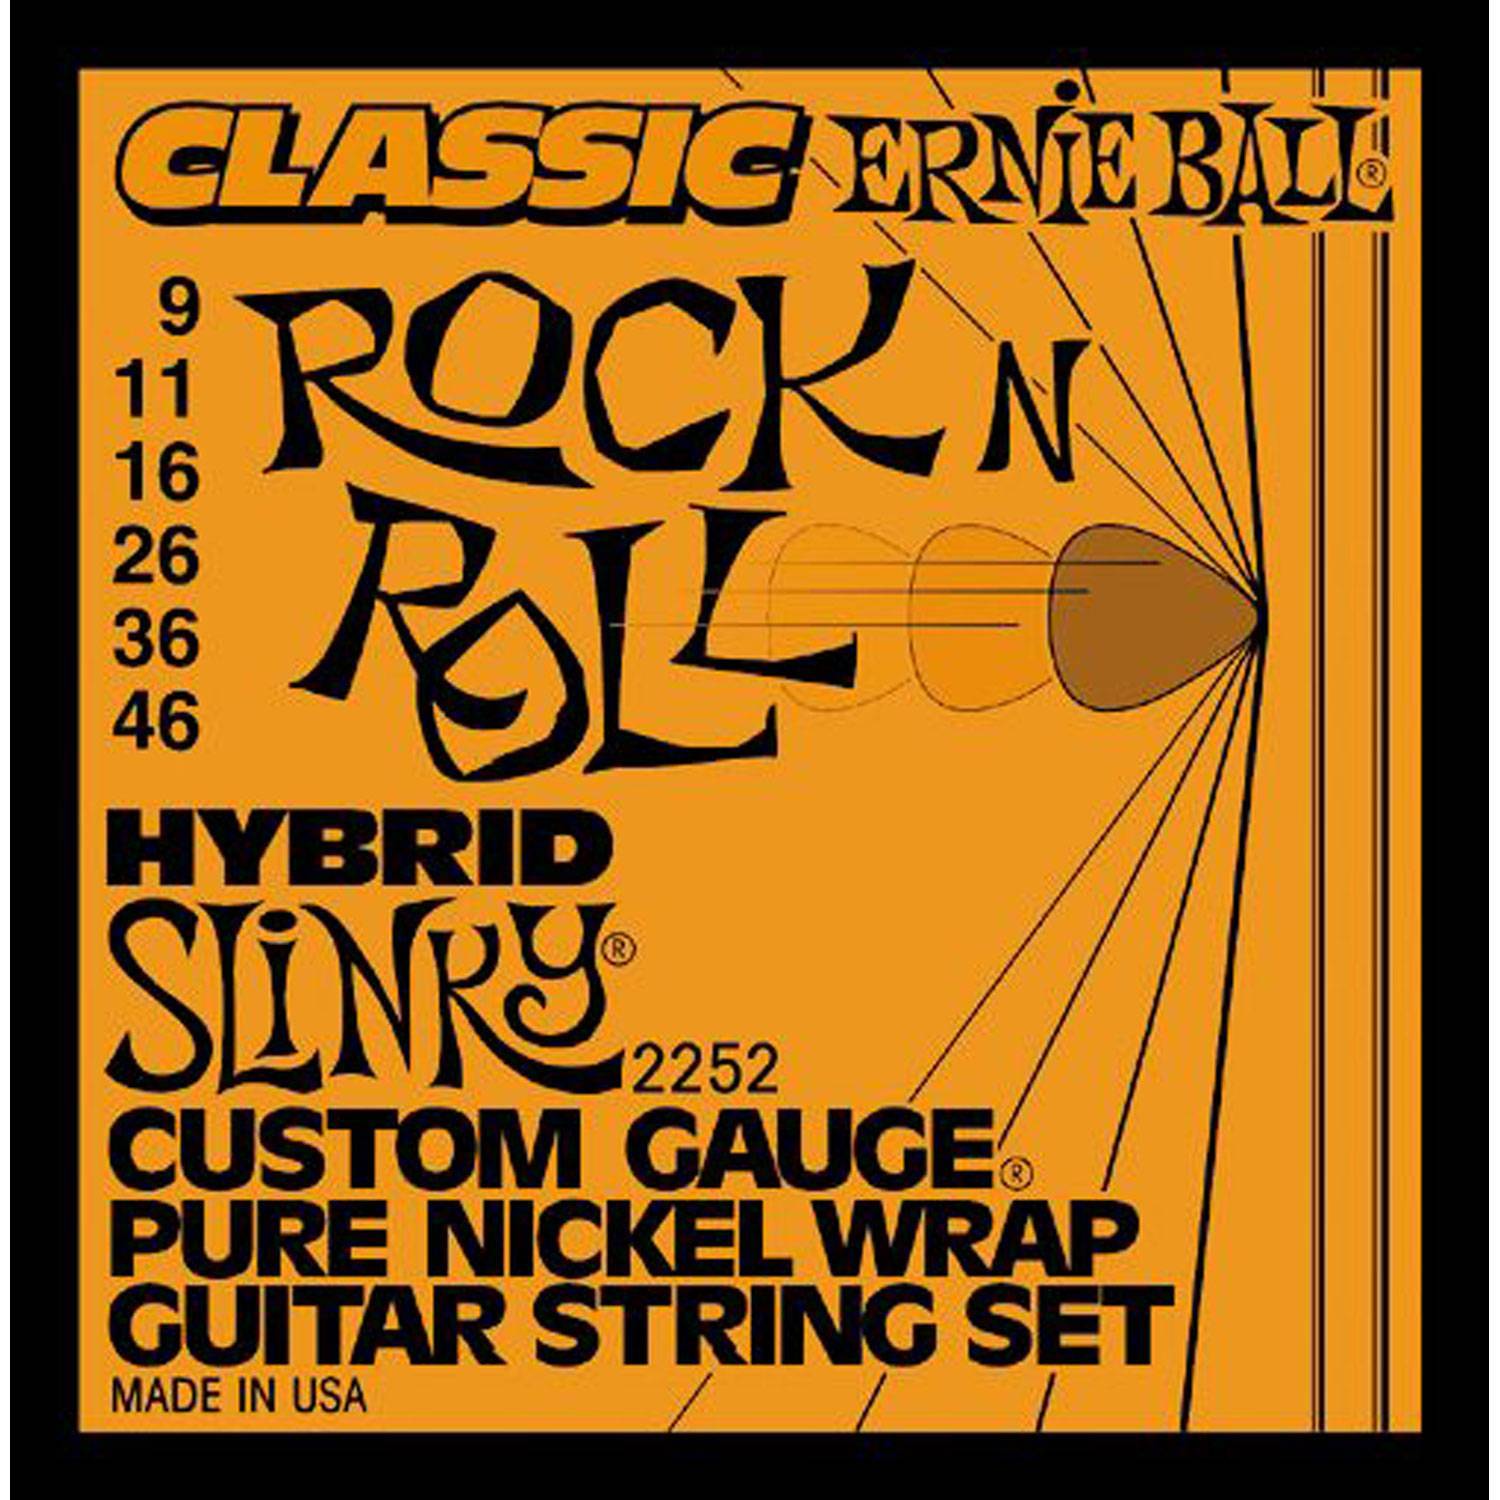 Ernie Ball 2252 струны для электрогитары Hybrid Slinky (9-11-16-26-36-46) Pure Nickel